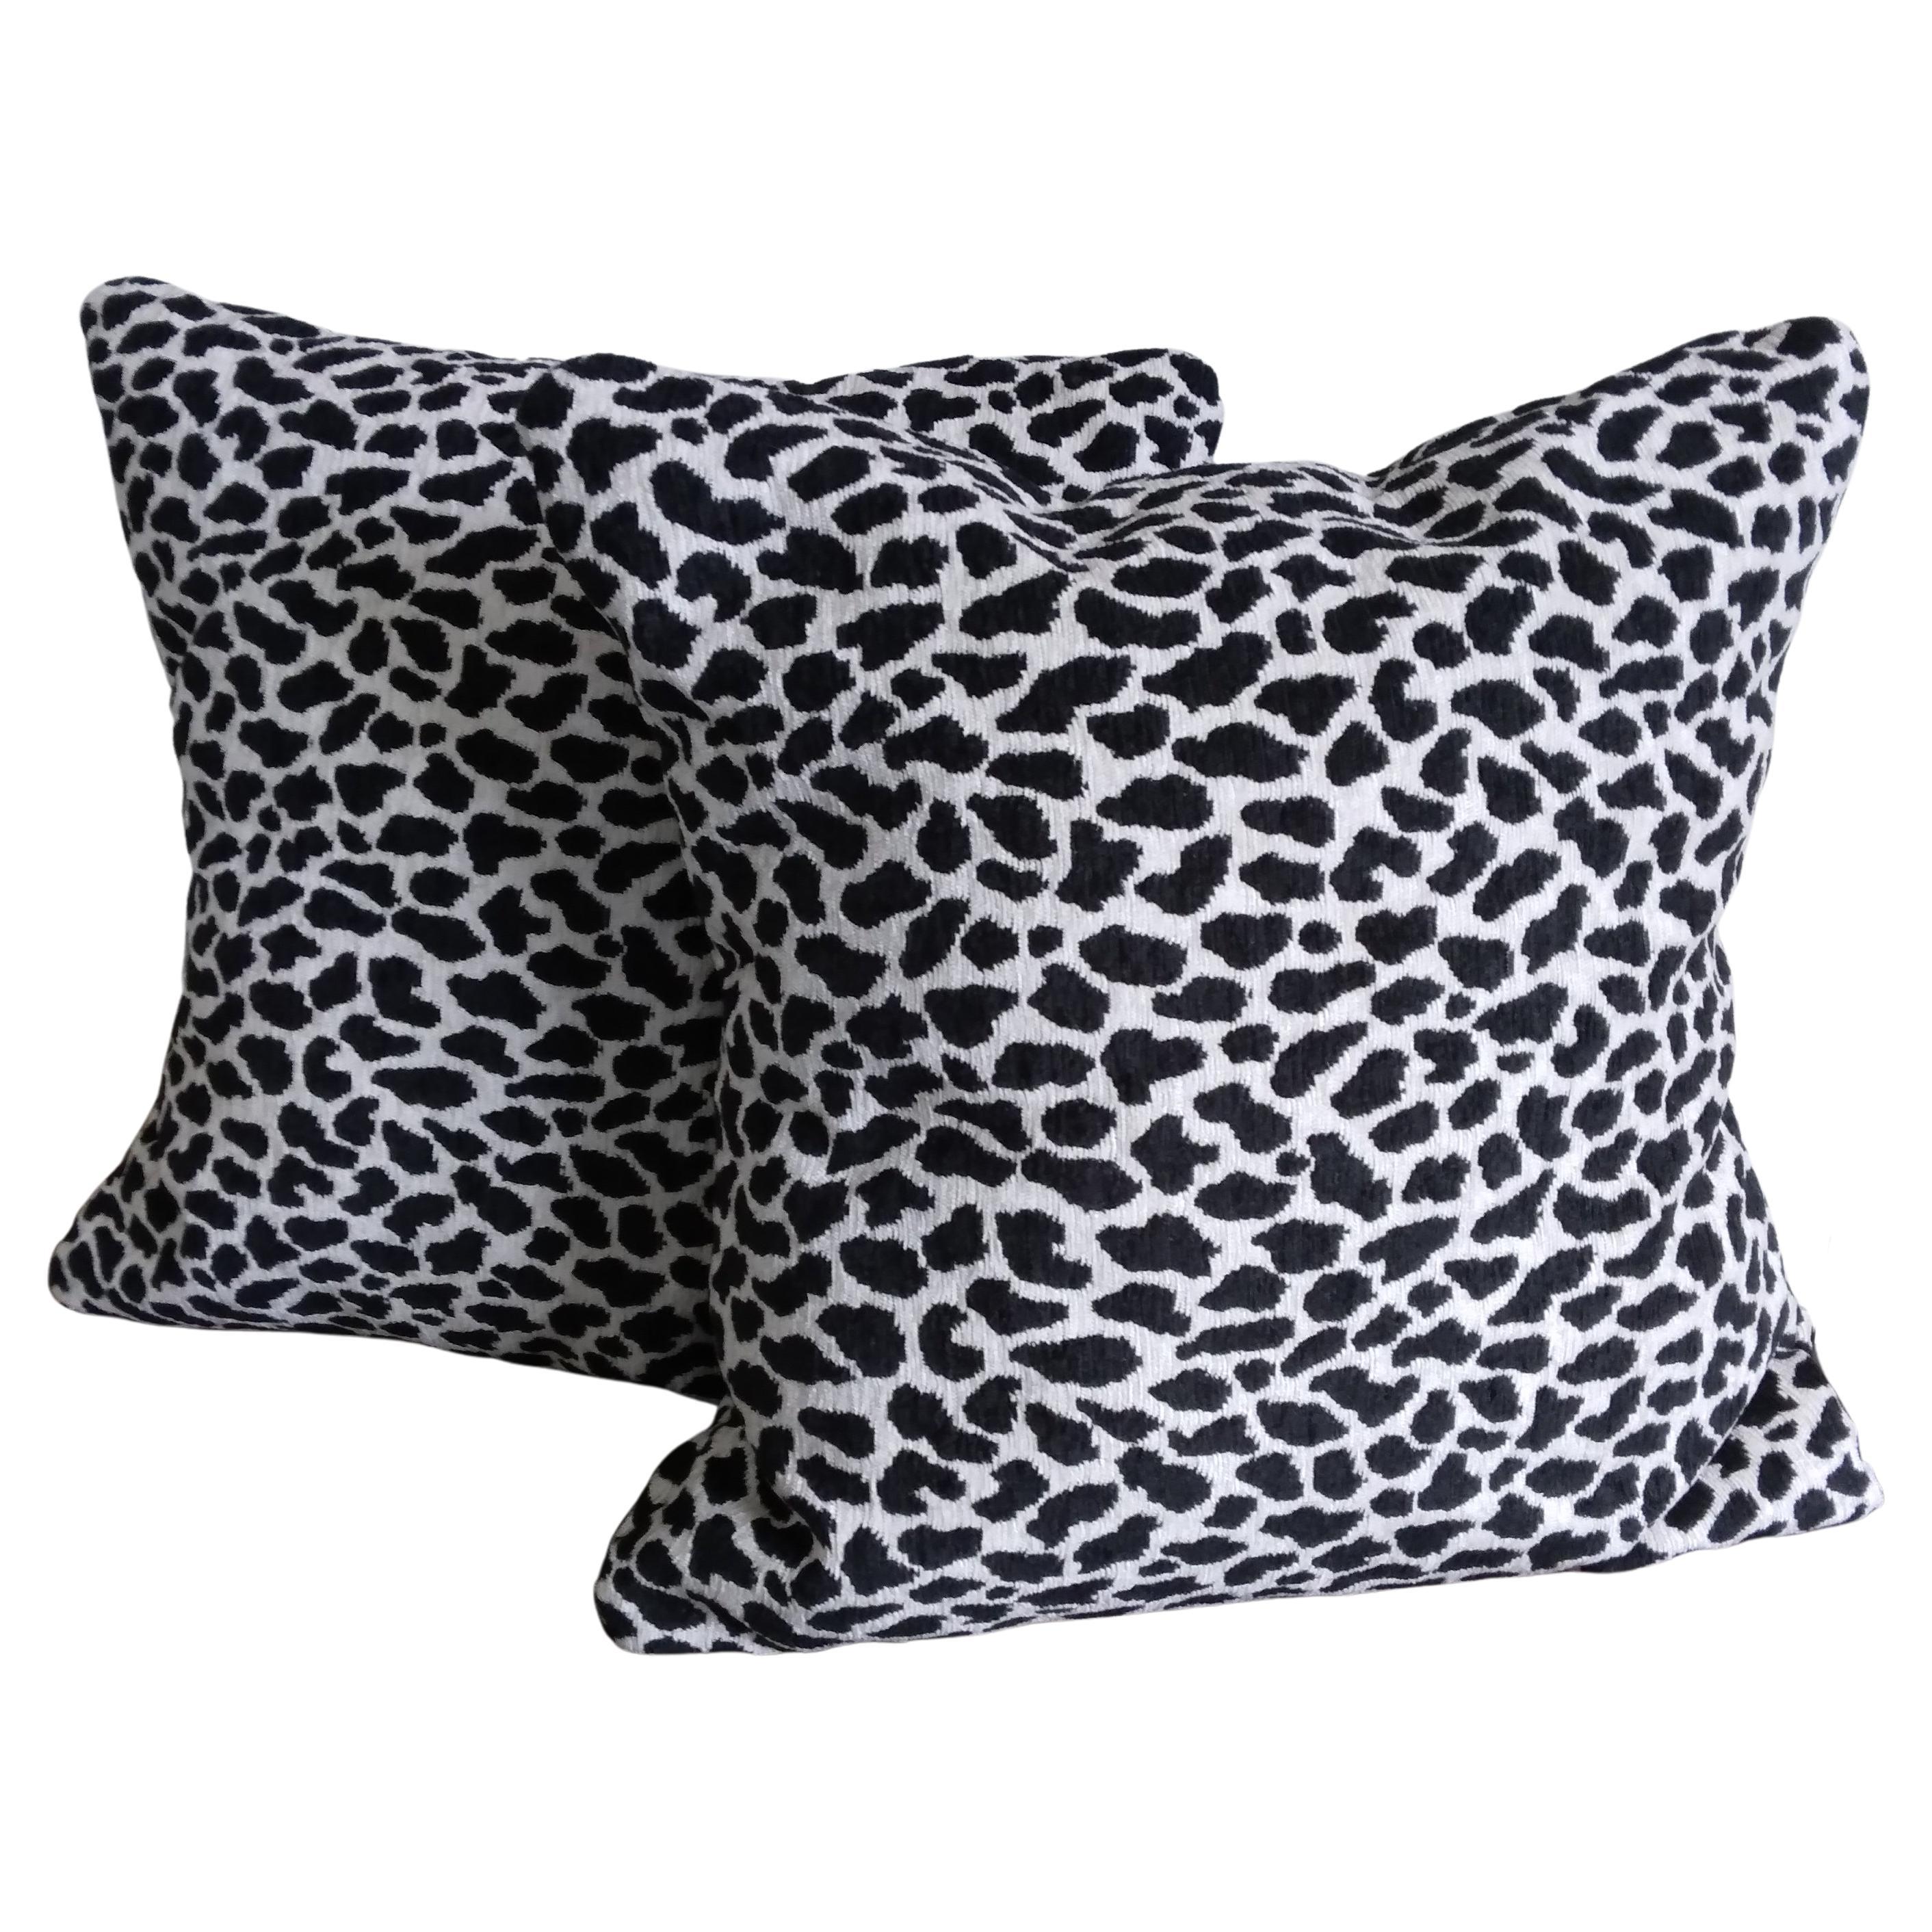 Contemporary Black & Silver Cheetah Print Accent Pillows, a Pair For Sale